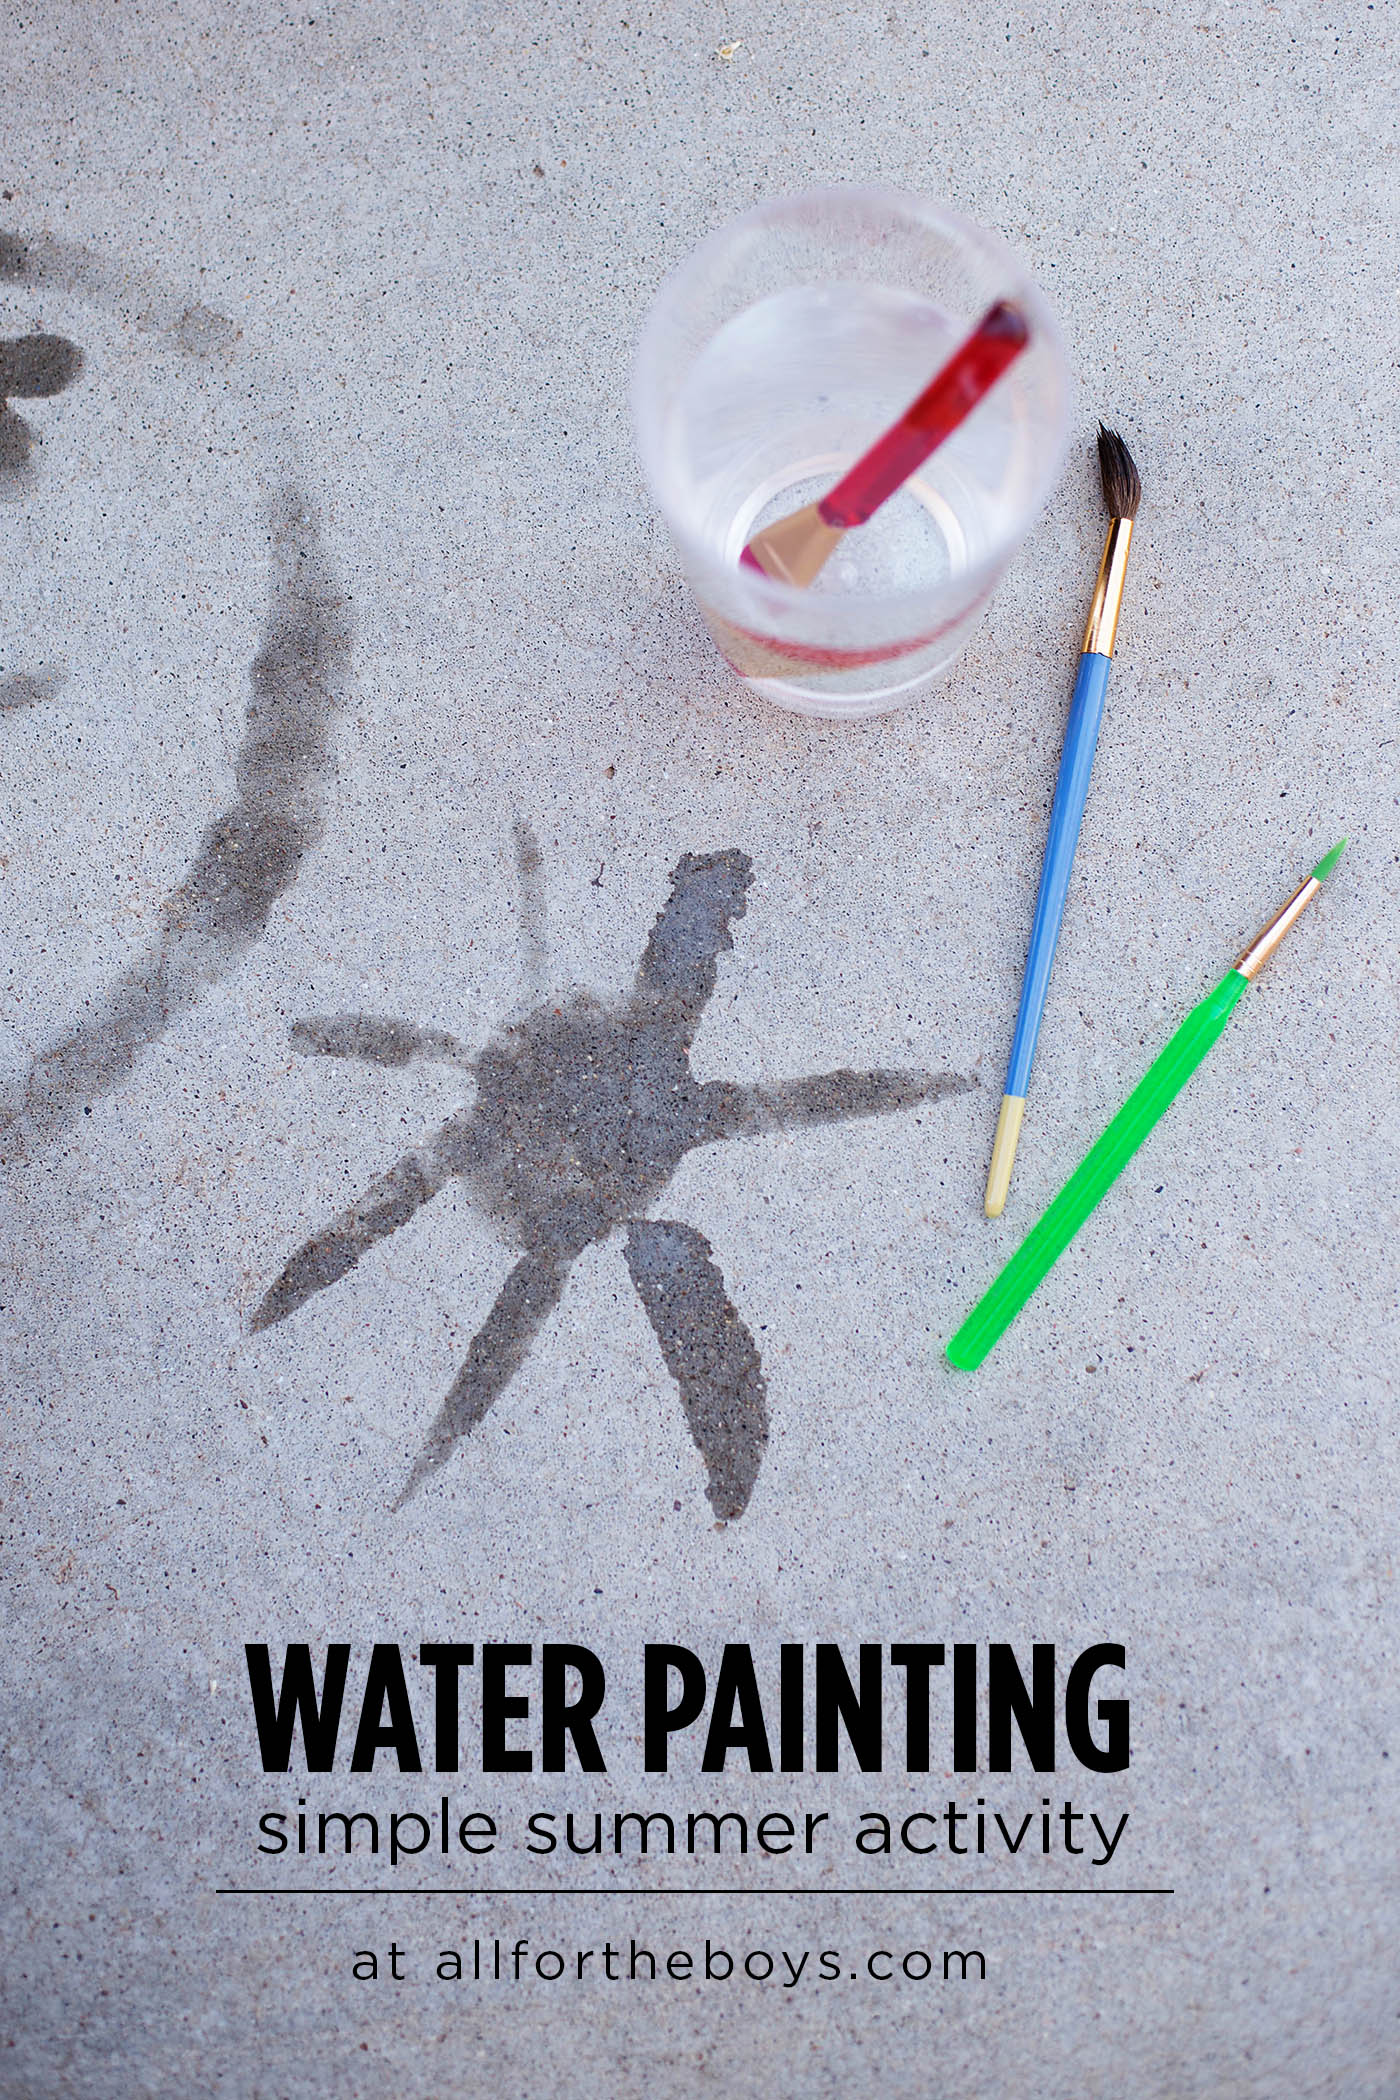 aftb-paint-water-title.jpg